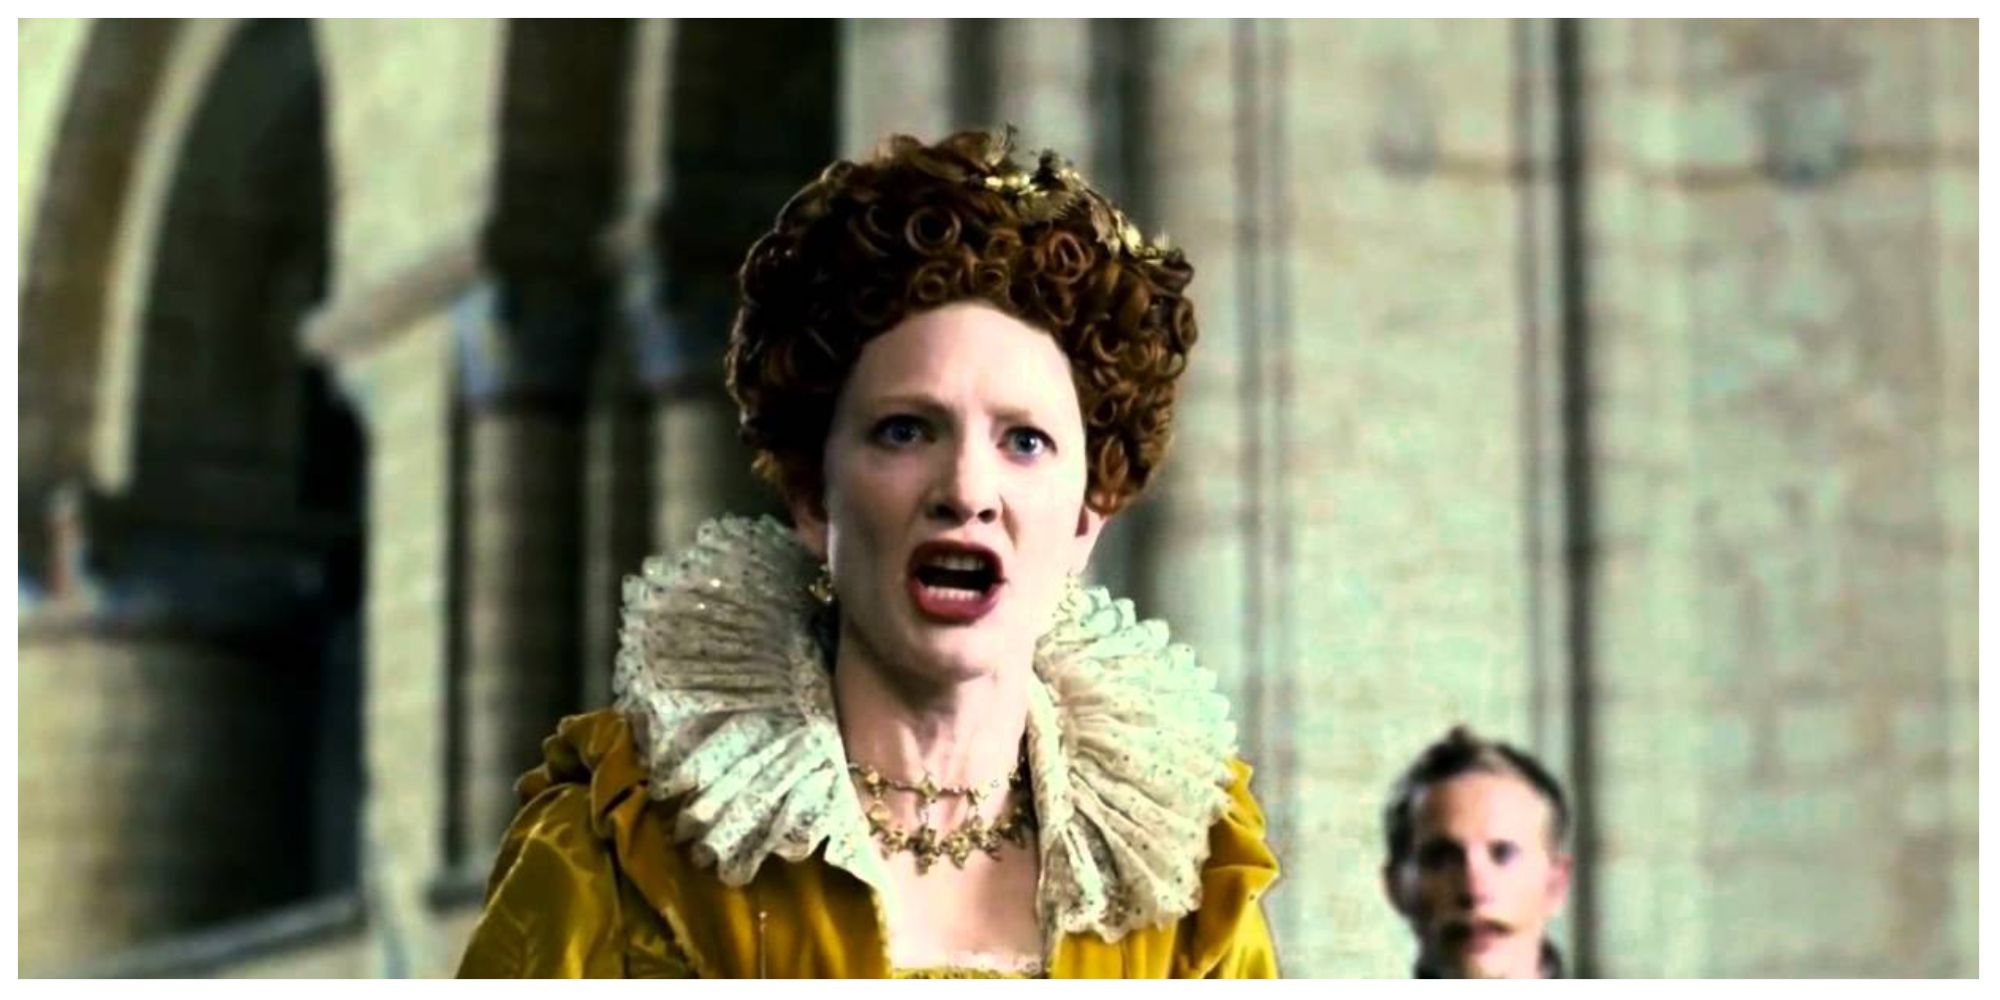 Cate Blanchett as Queen Elizabeth I in Elizabeth: The Golden Age